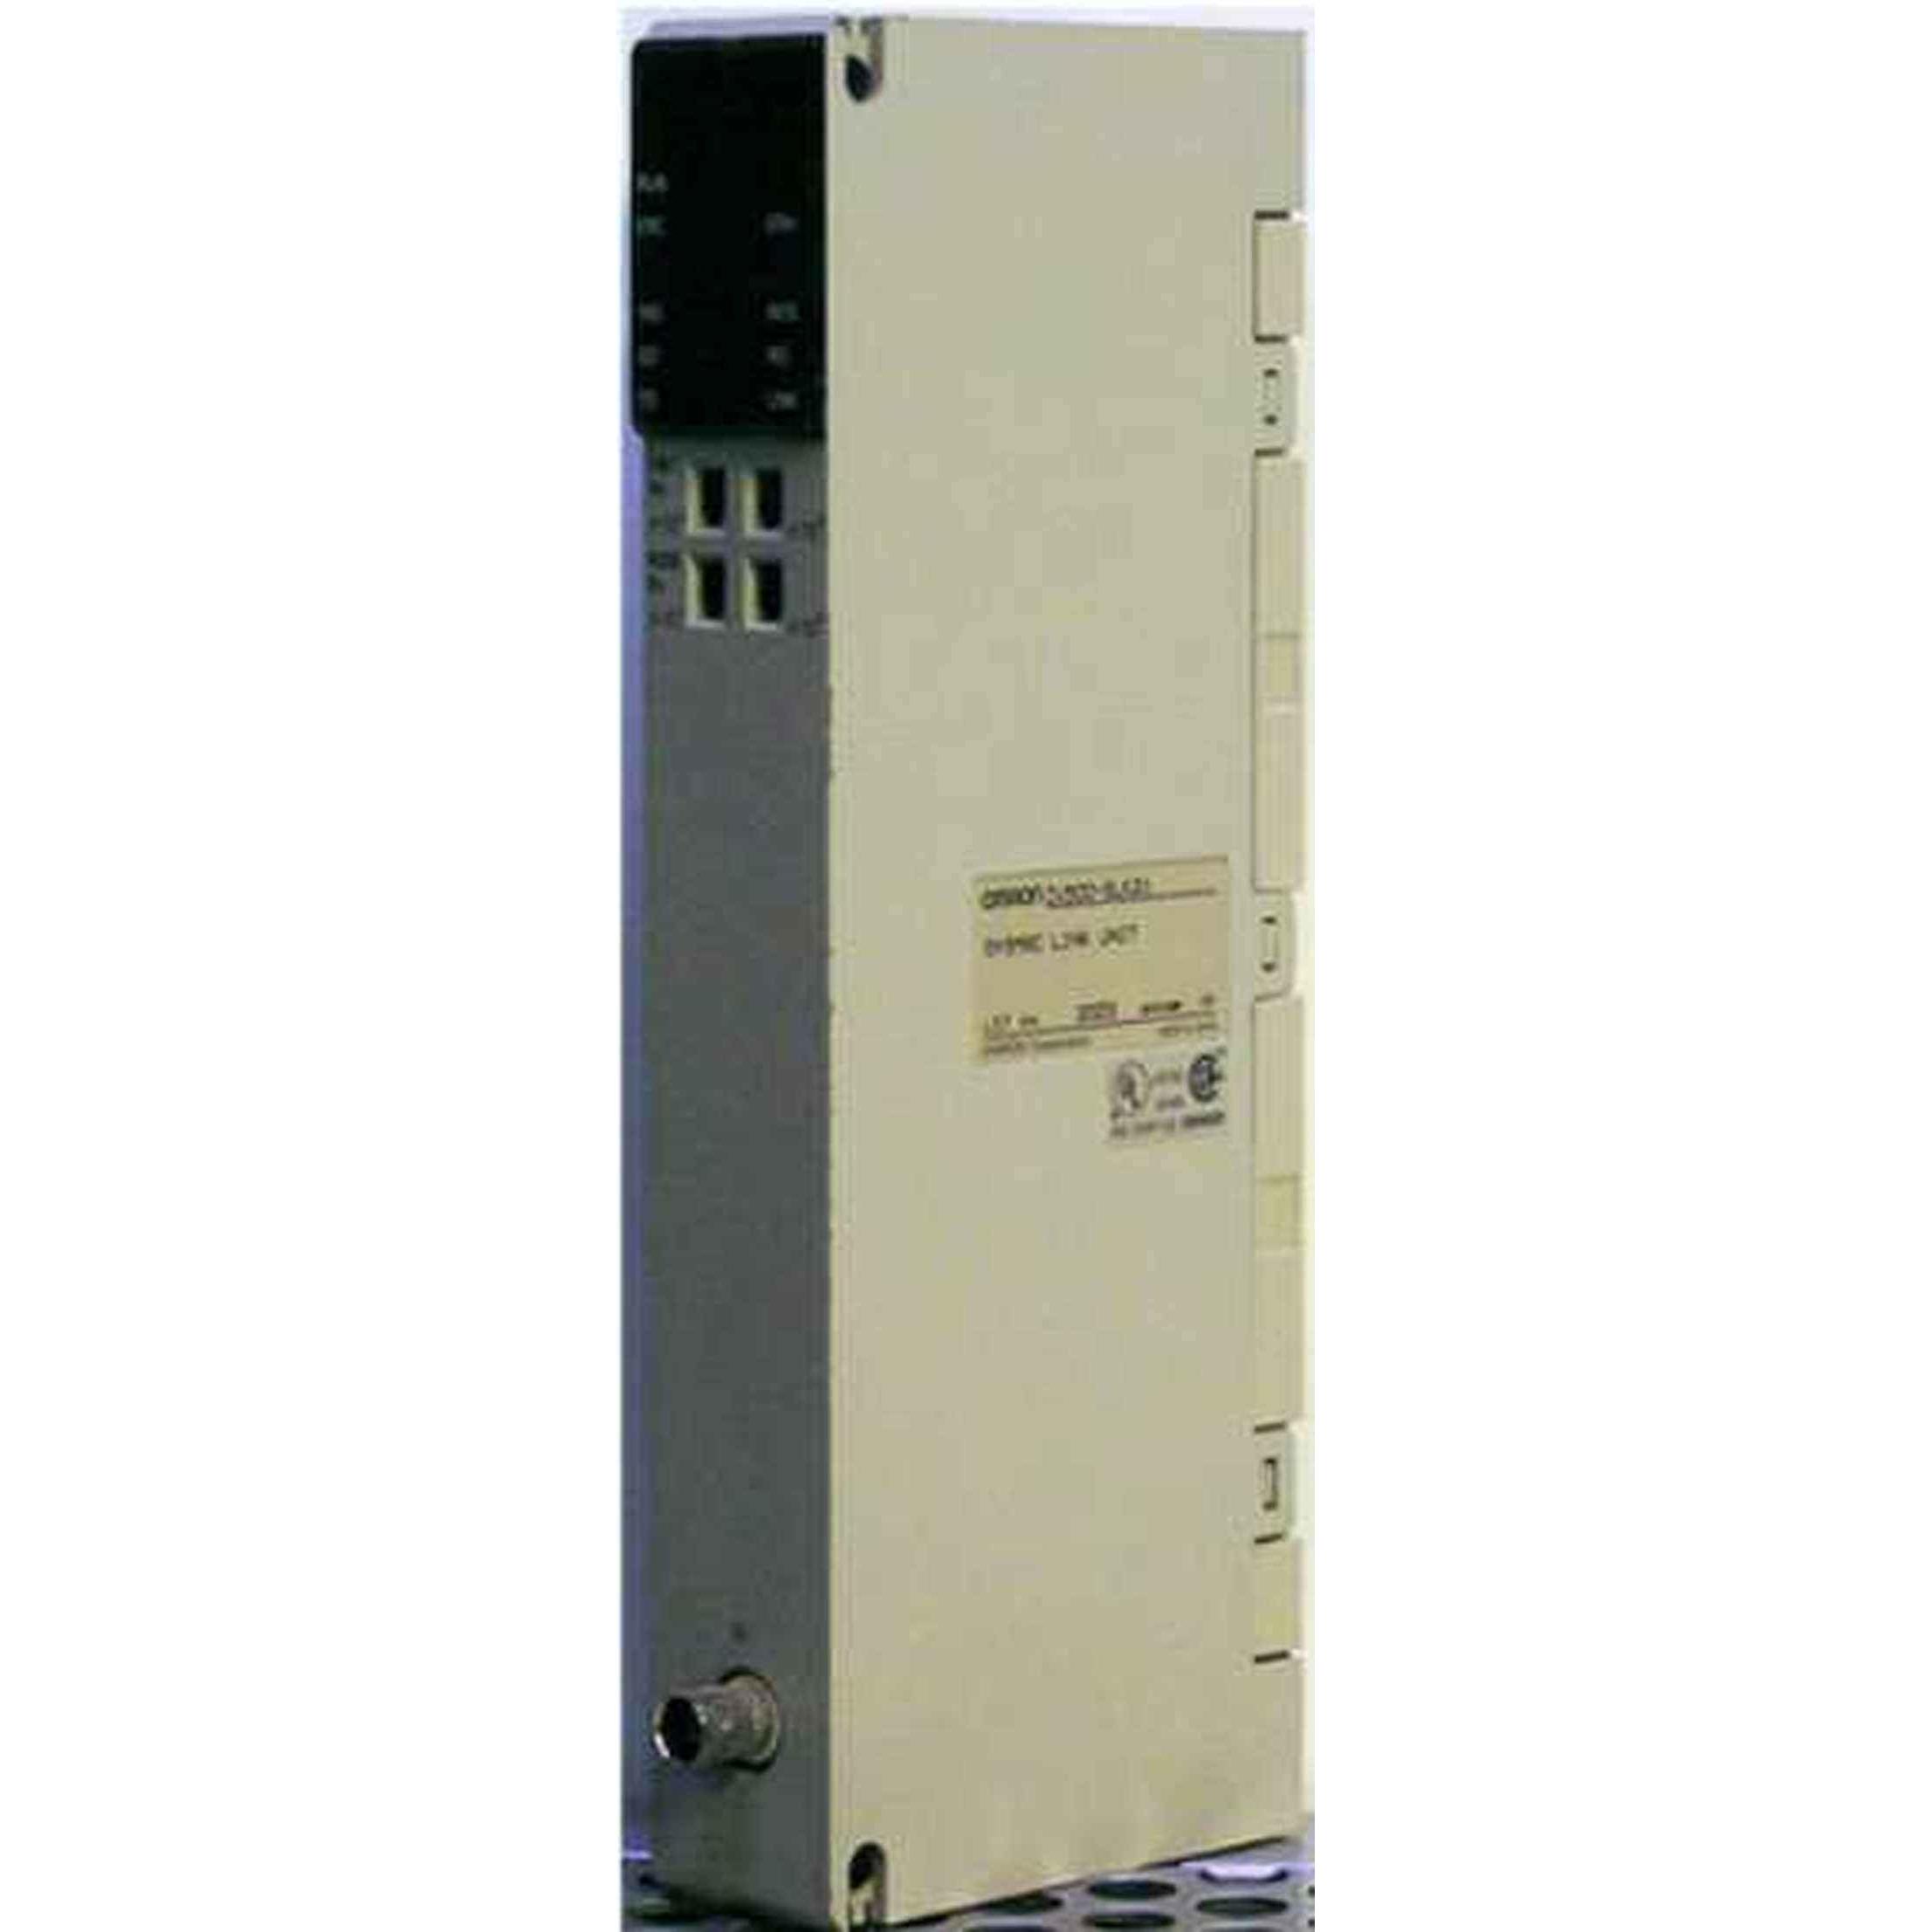 非实价脉冲模块, CV500-SLK21, CV500-PS221, CVM1-PRO01-V1议价